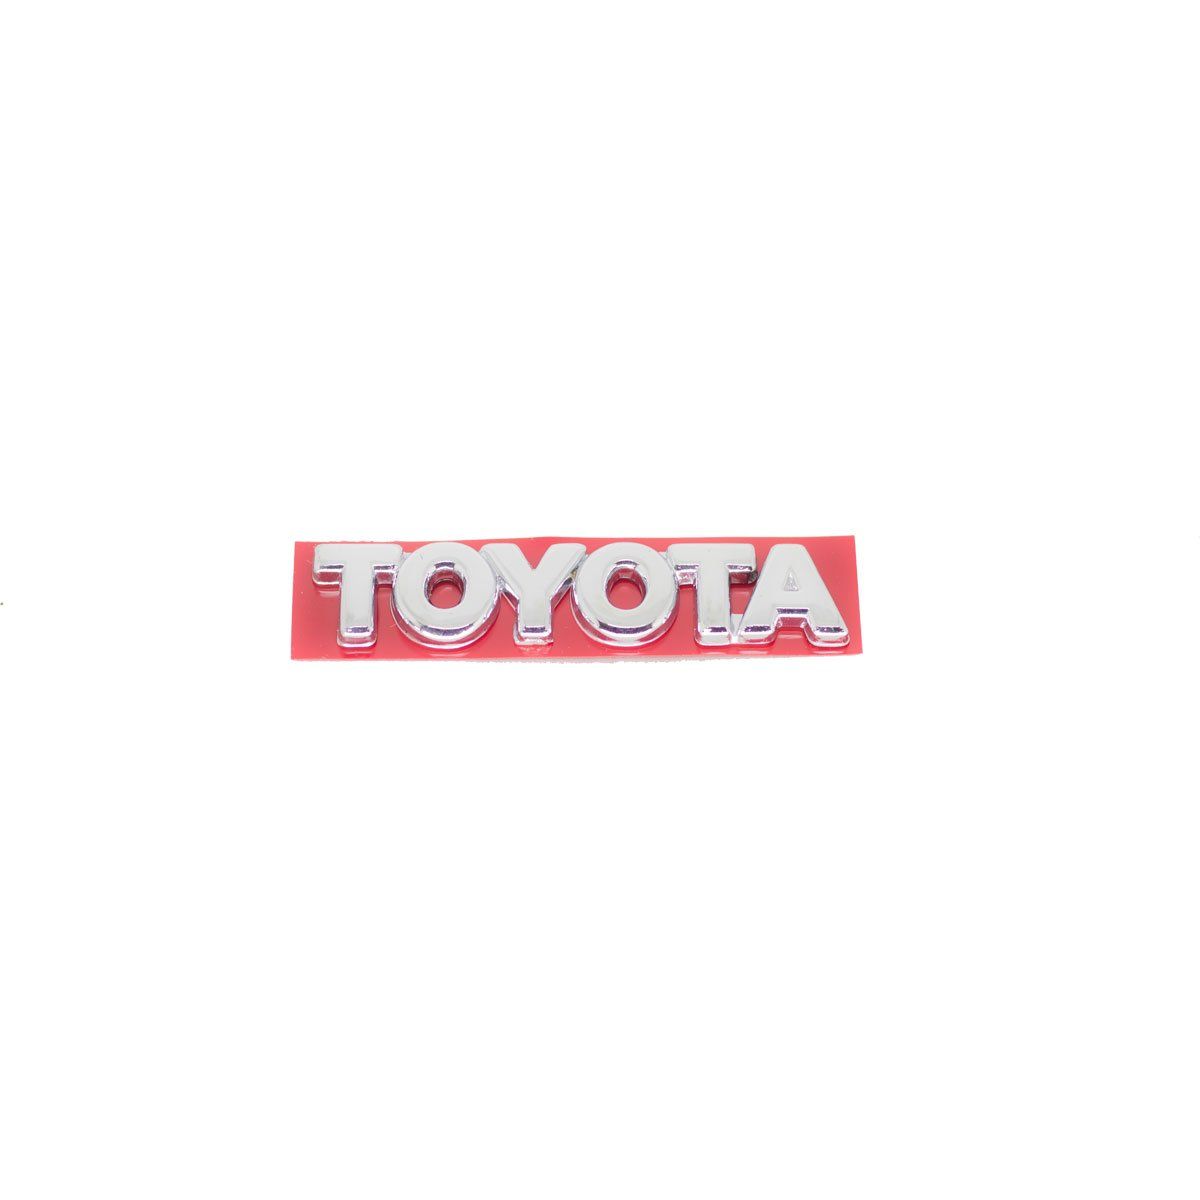 Emblema Toyota 03/ Cromado